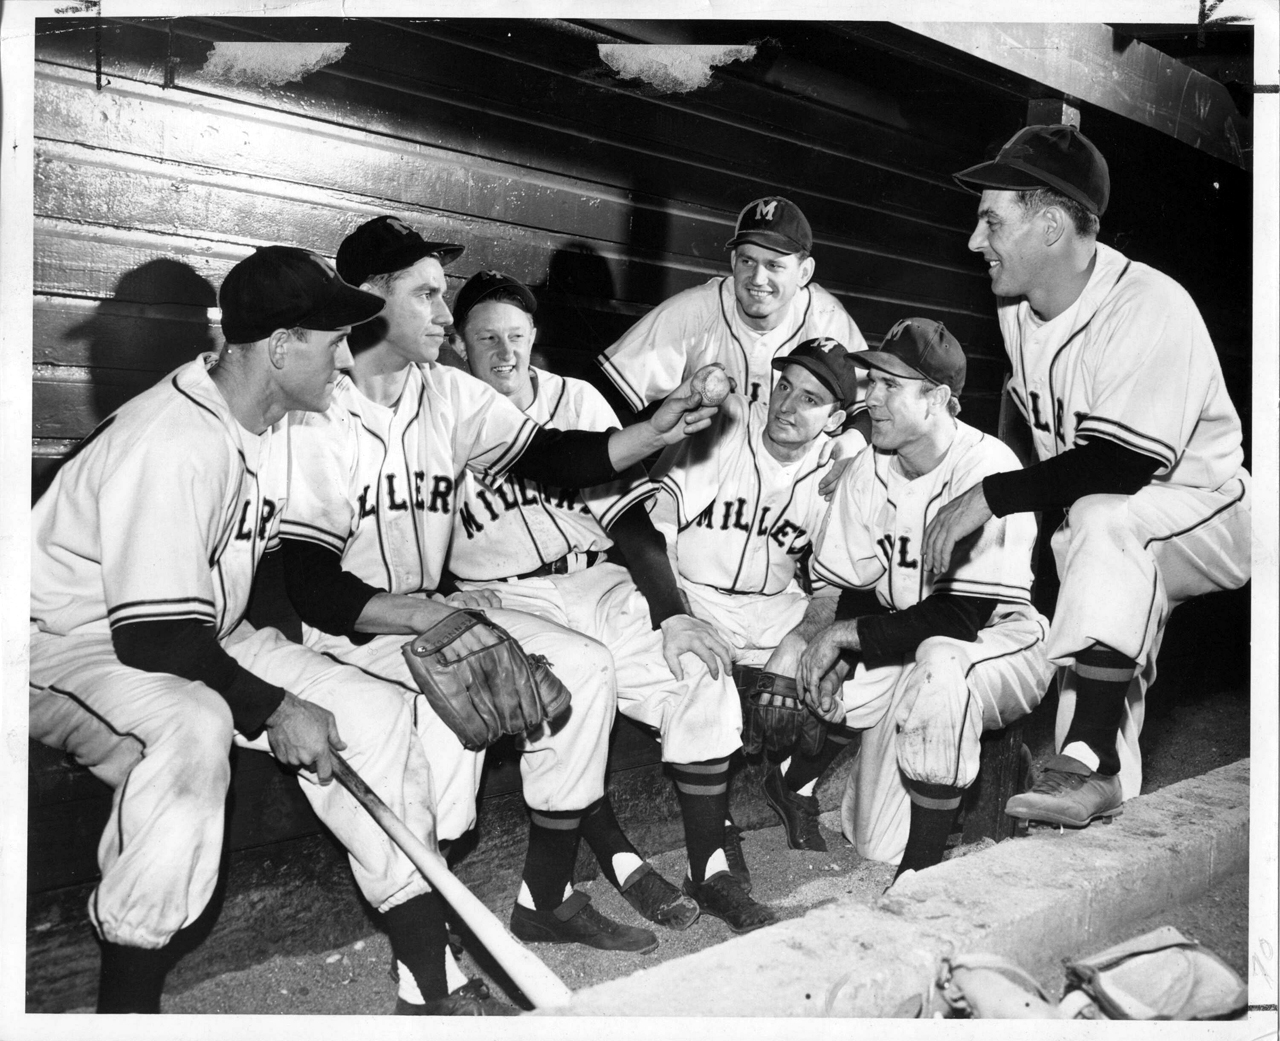 The Montgomery Baseball Blog: MILLER TIME